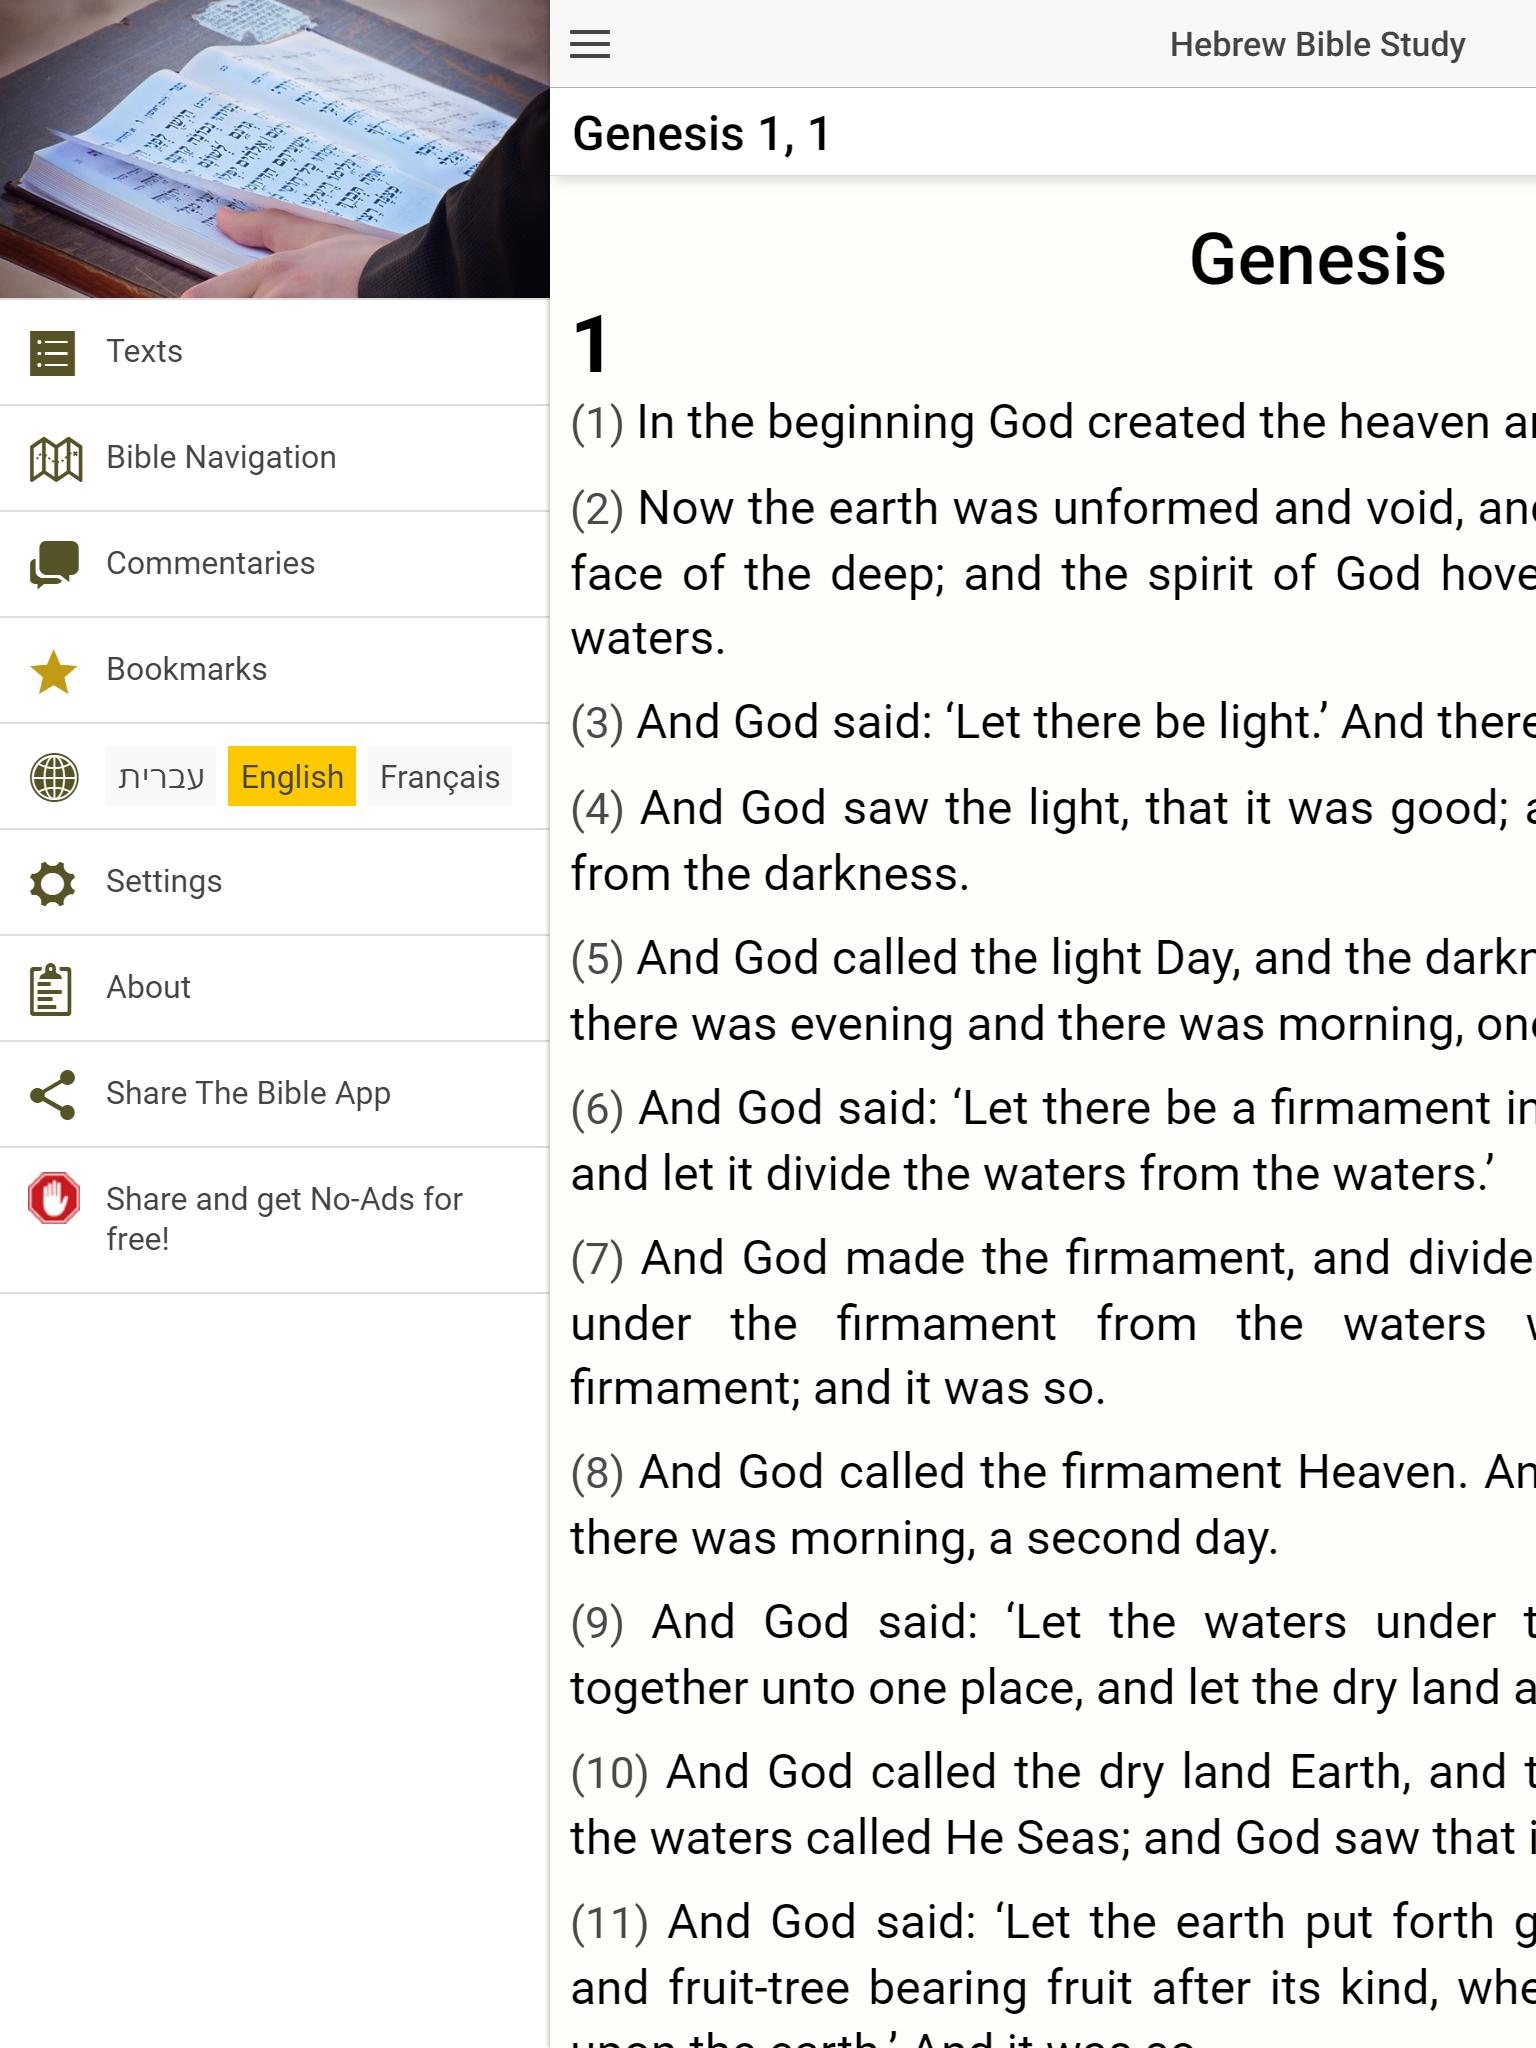 Hebrew Bible Study Commentary & Translation 30.0.29 Screenshot 20